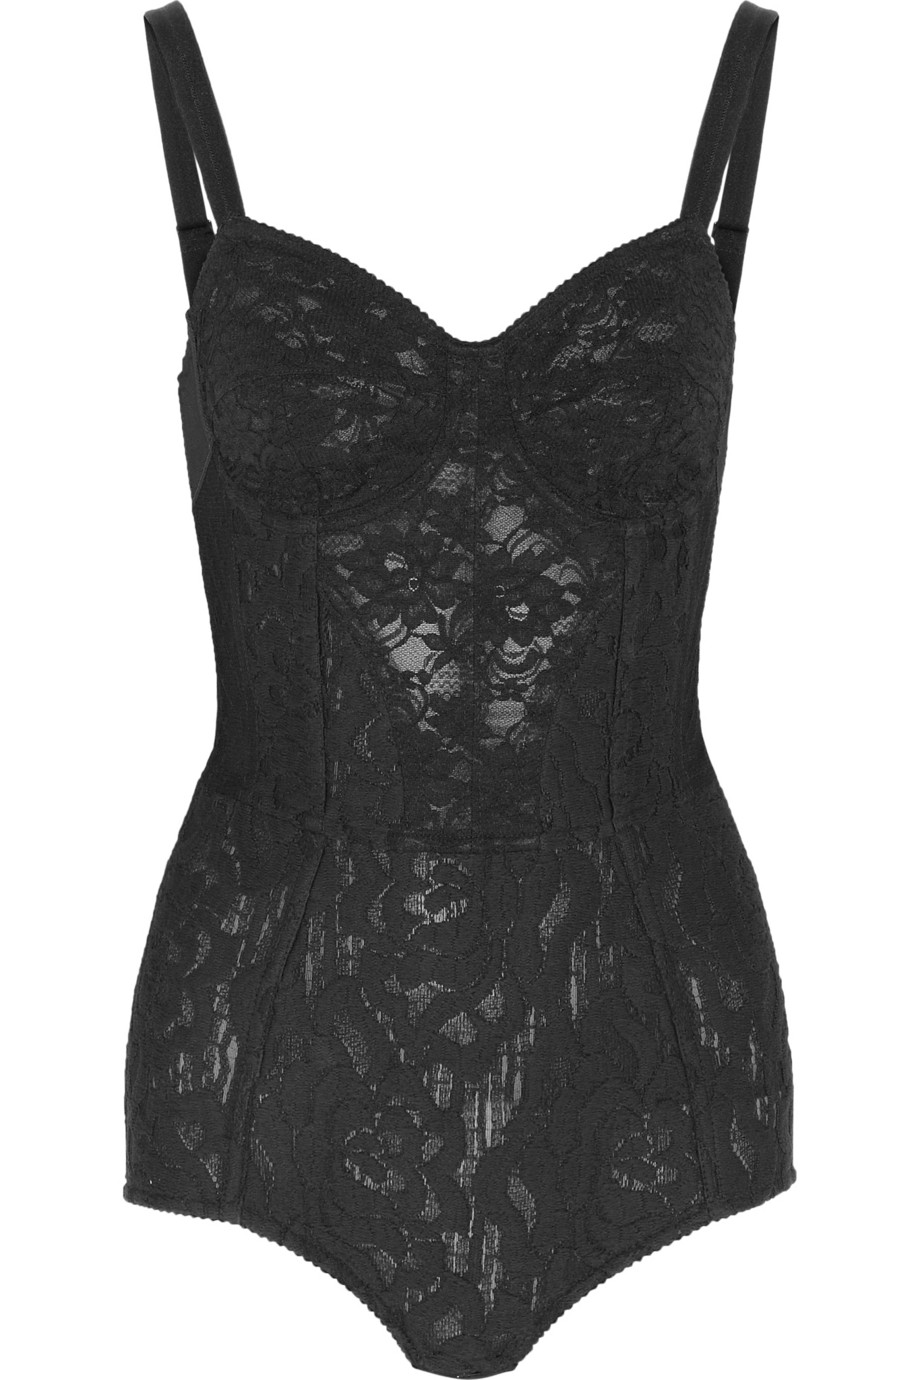 Lyst - Dolce & Gabbana Lace Bodysuit in Black